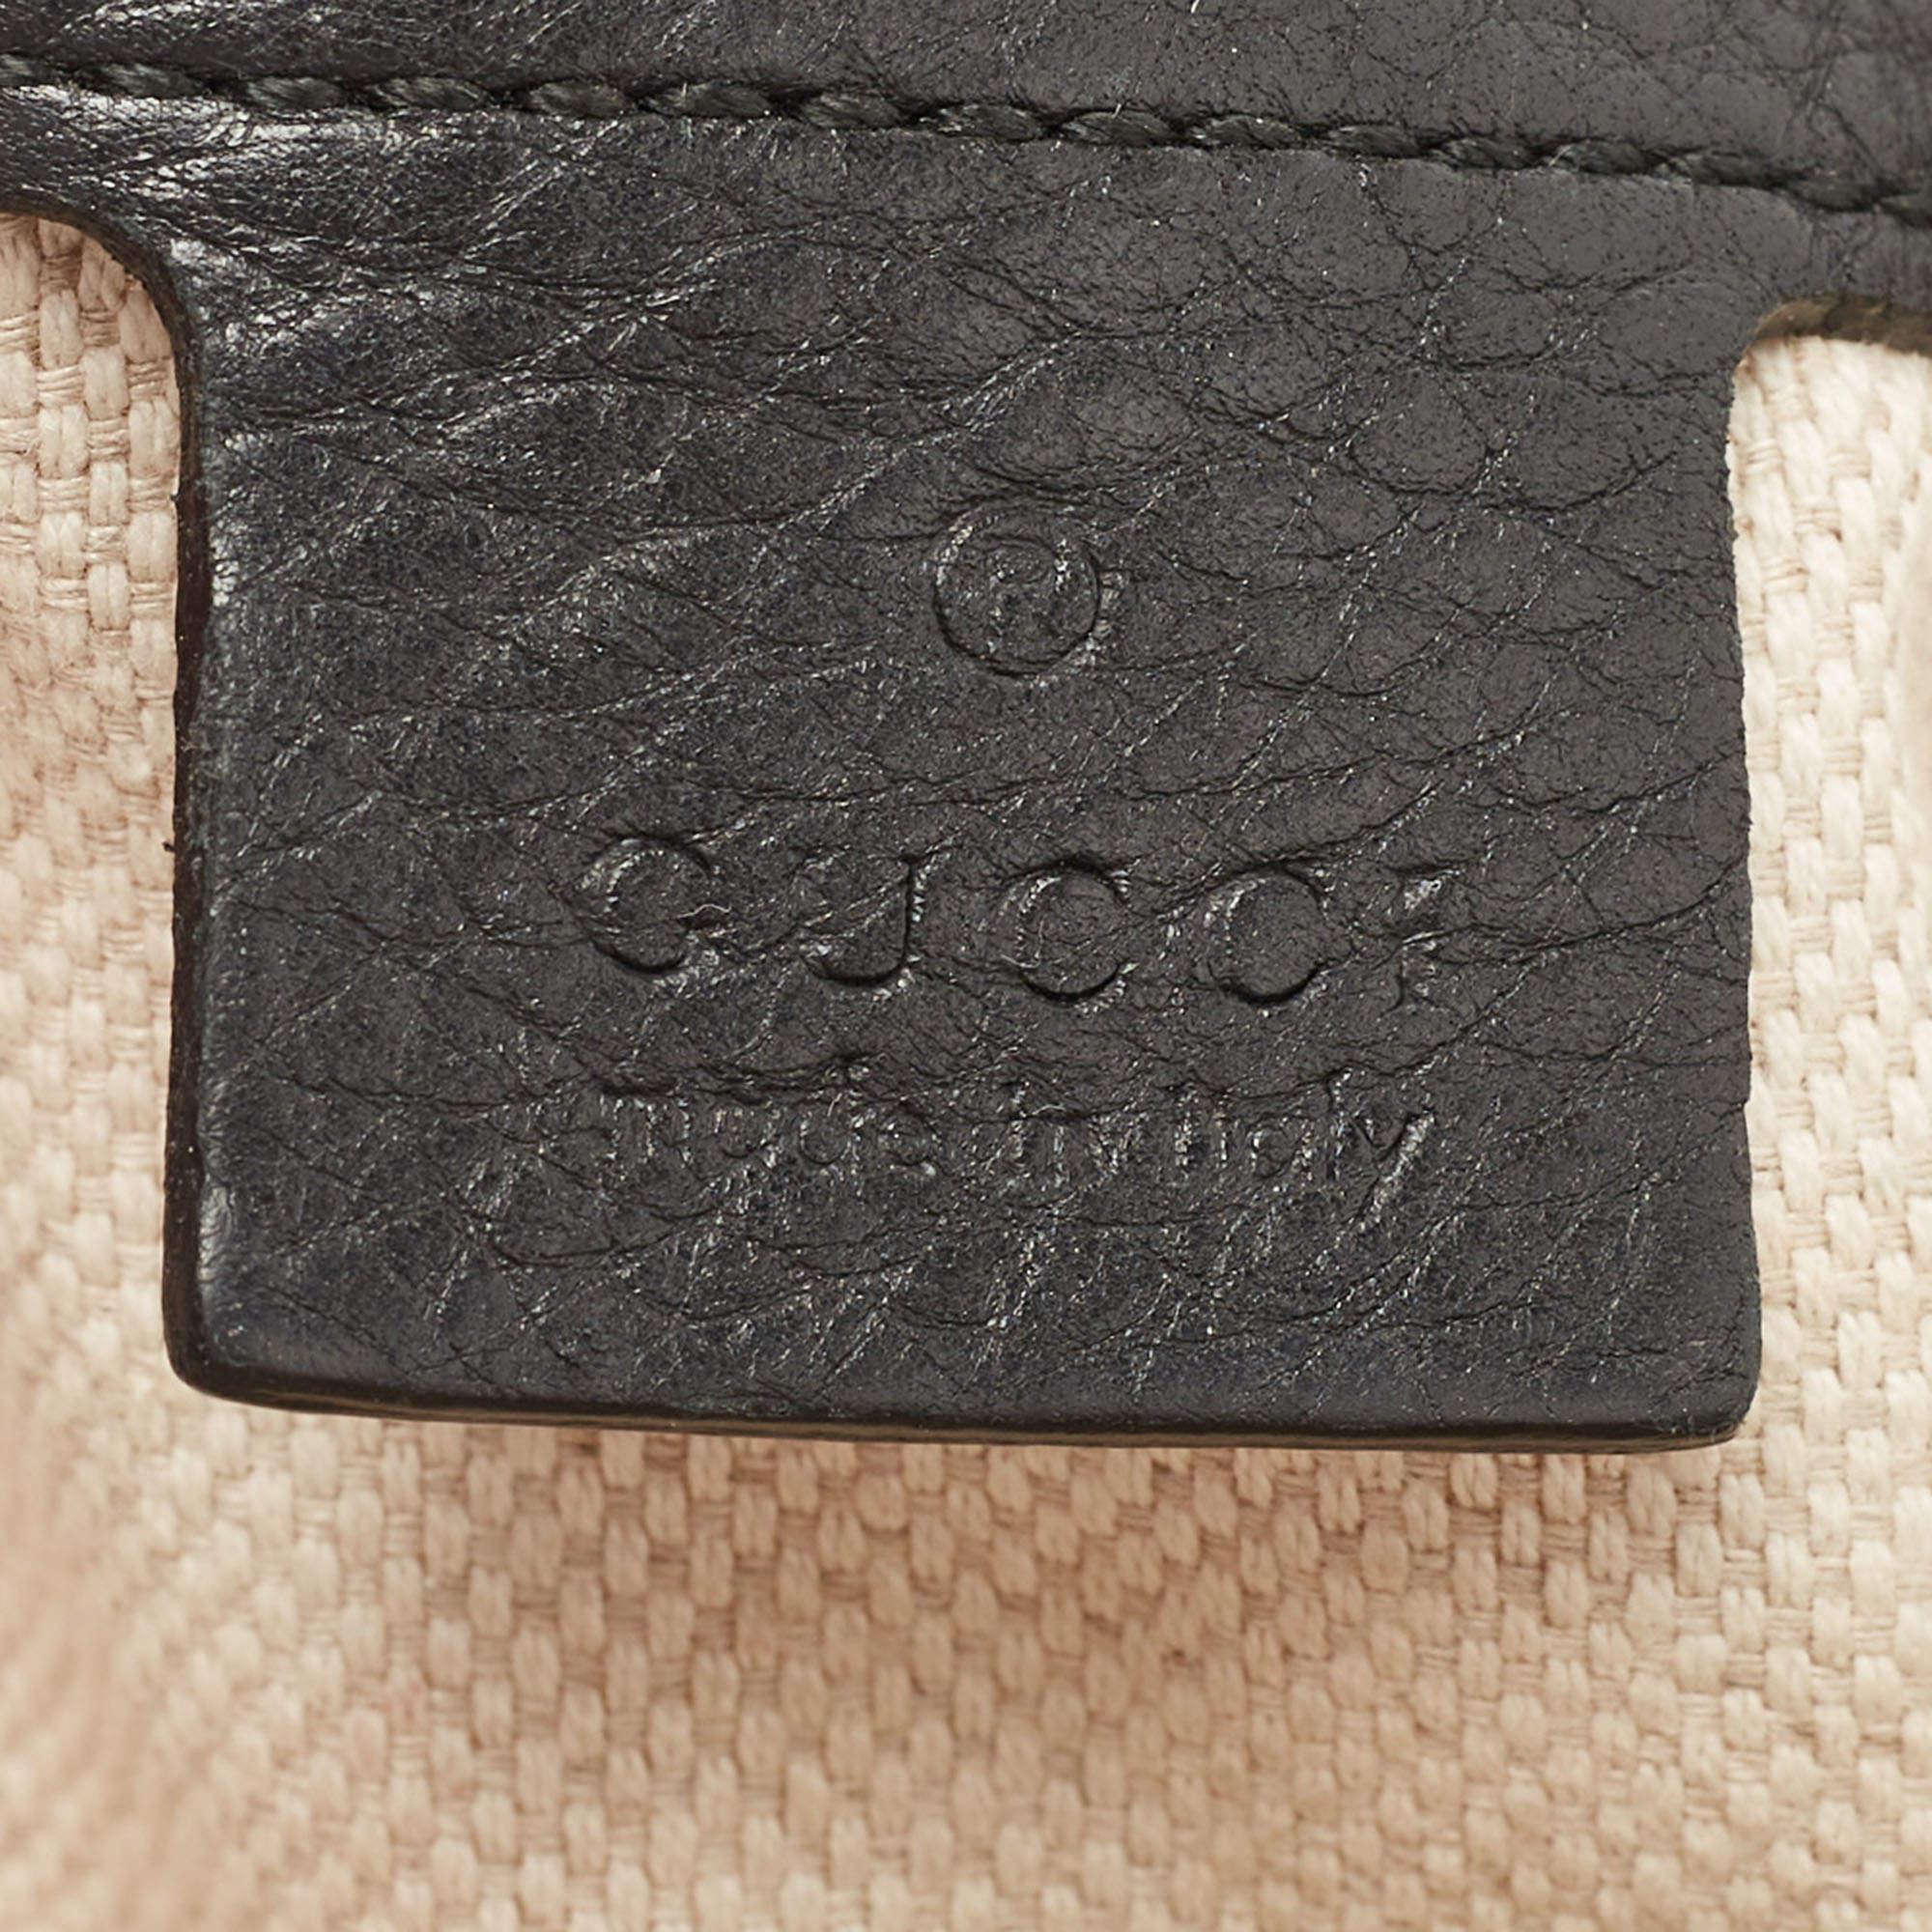 Women's Gucci Black Leather Medium Soho Chain Shoulder Bag